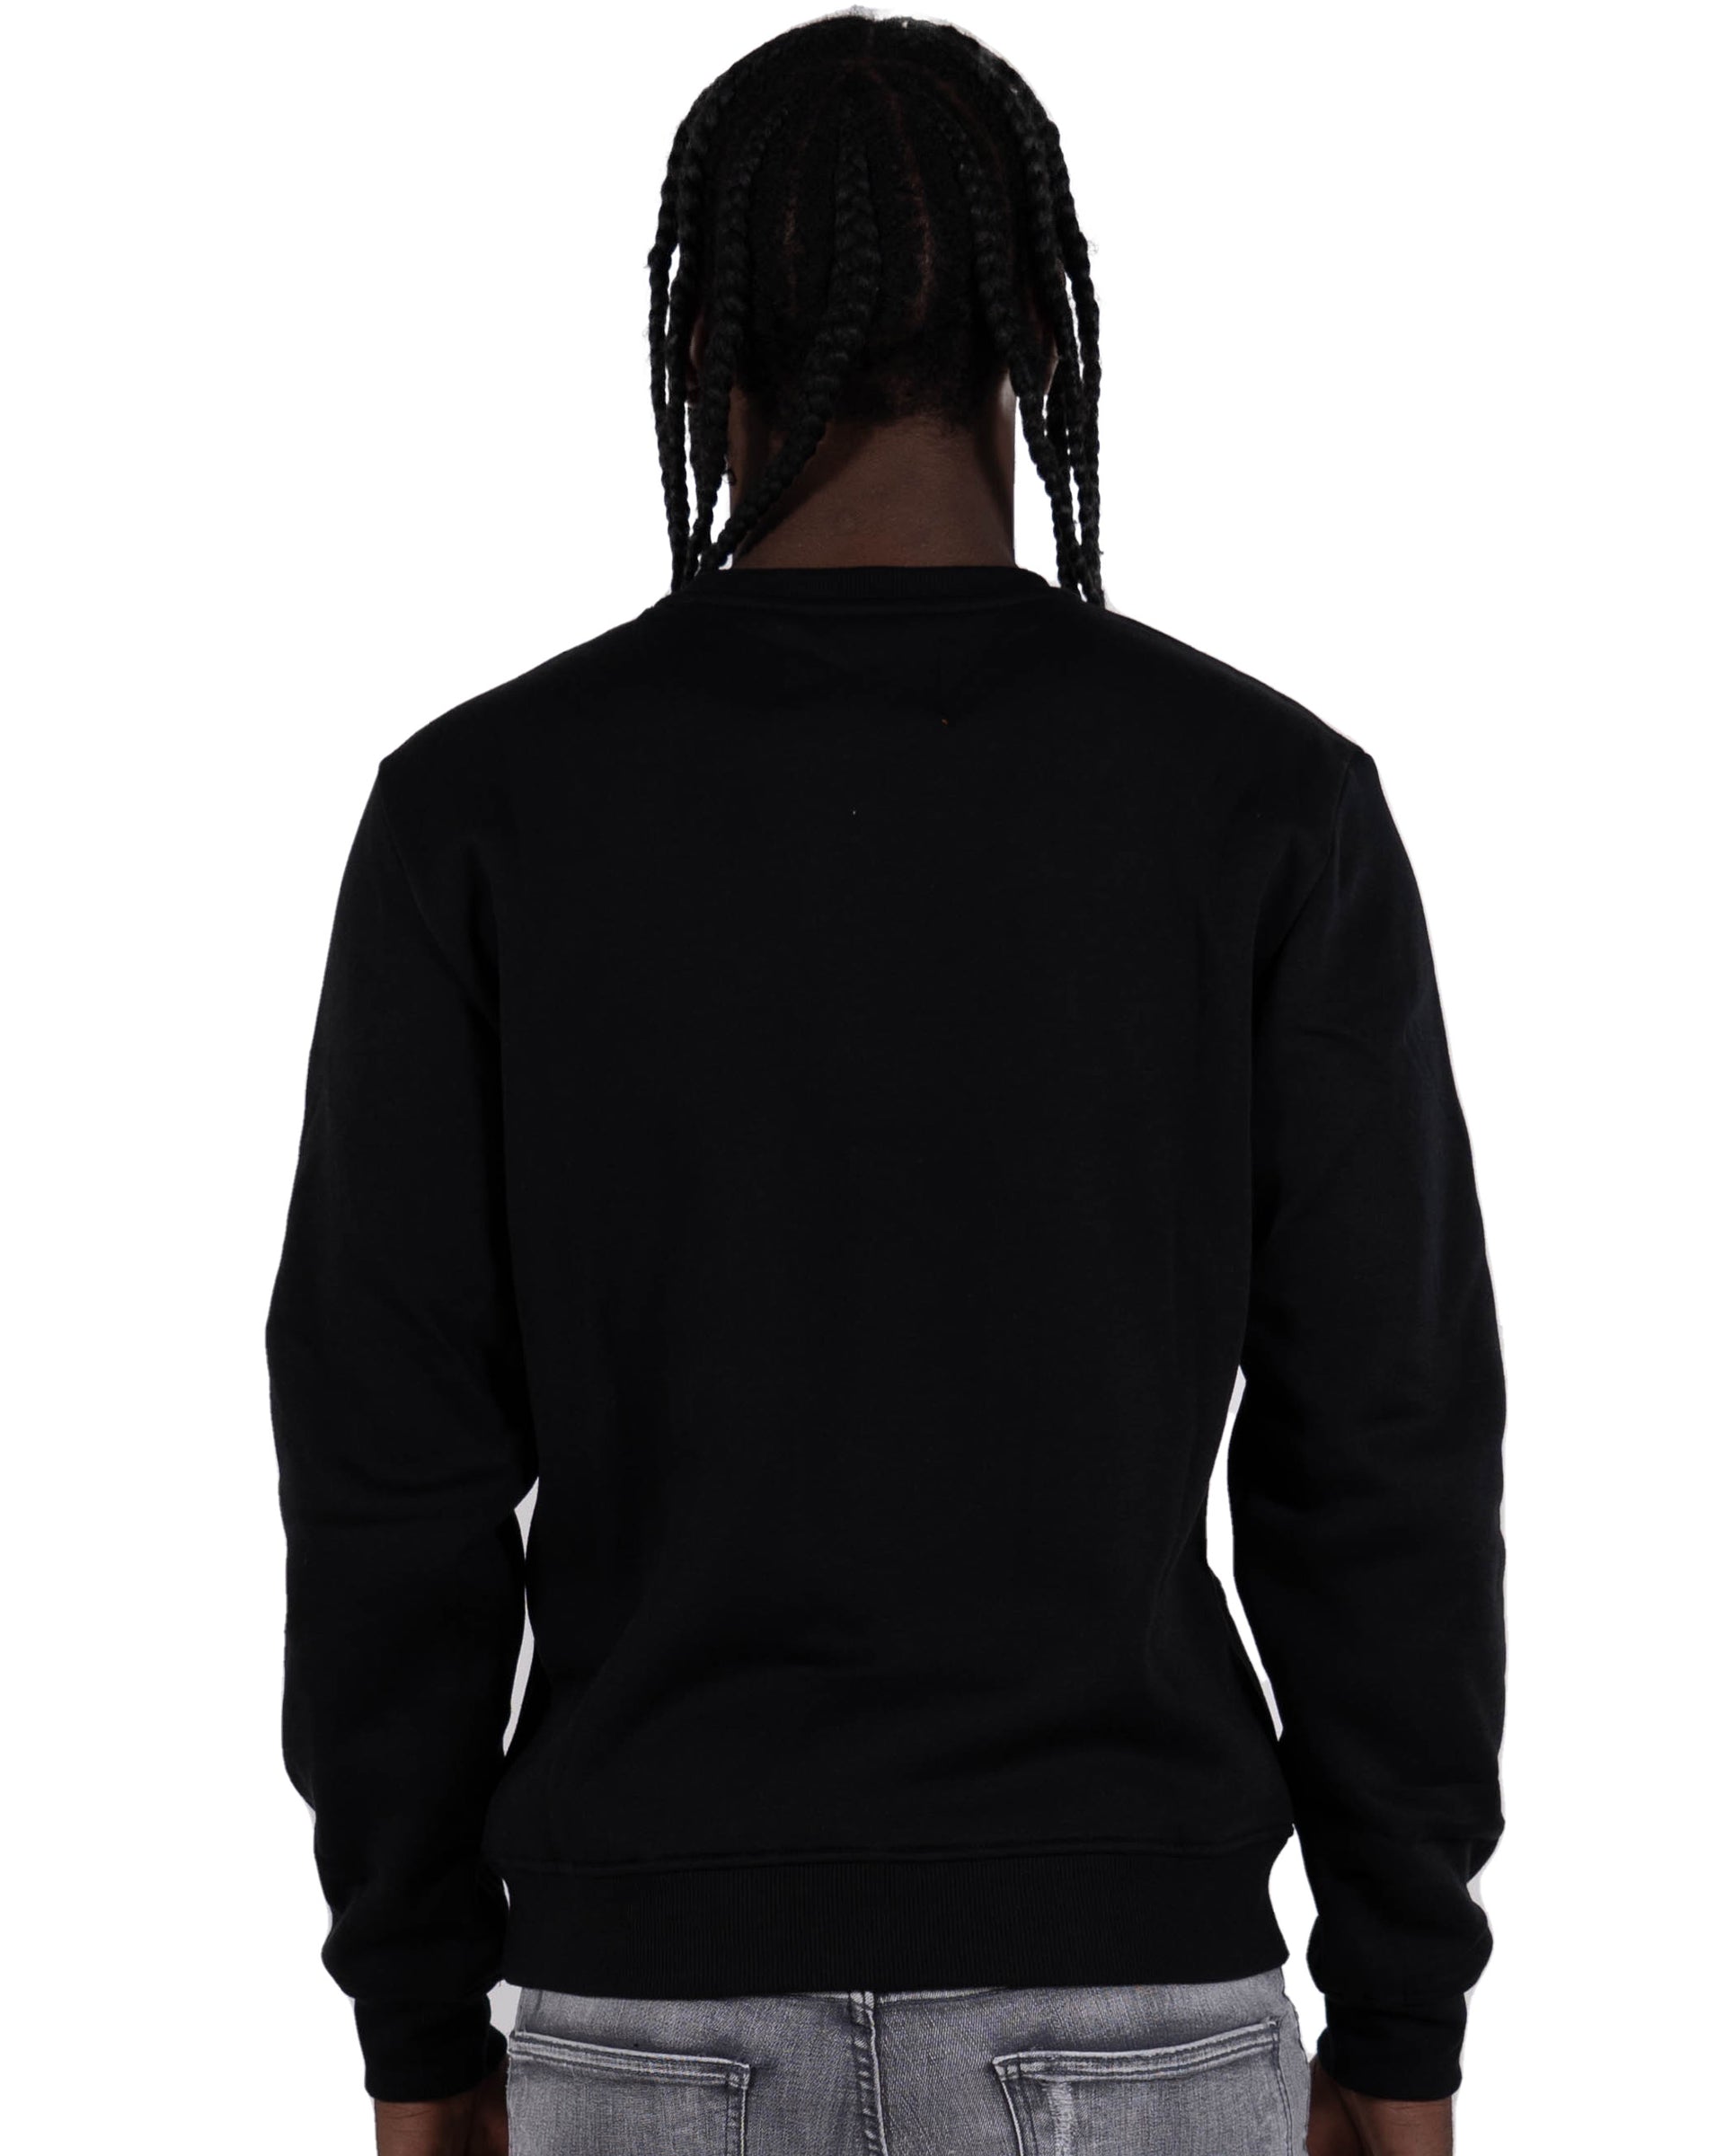 Men's "Fearless" Tiger Graphic Multi Texture Sweatshirt | Black